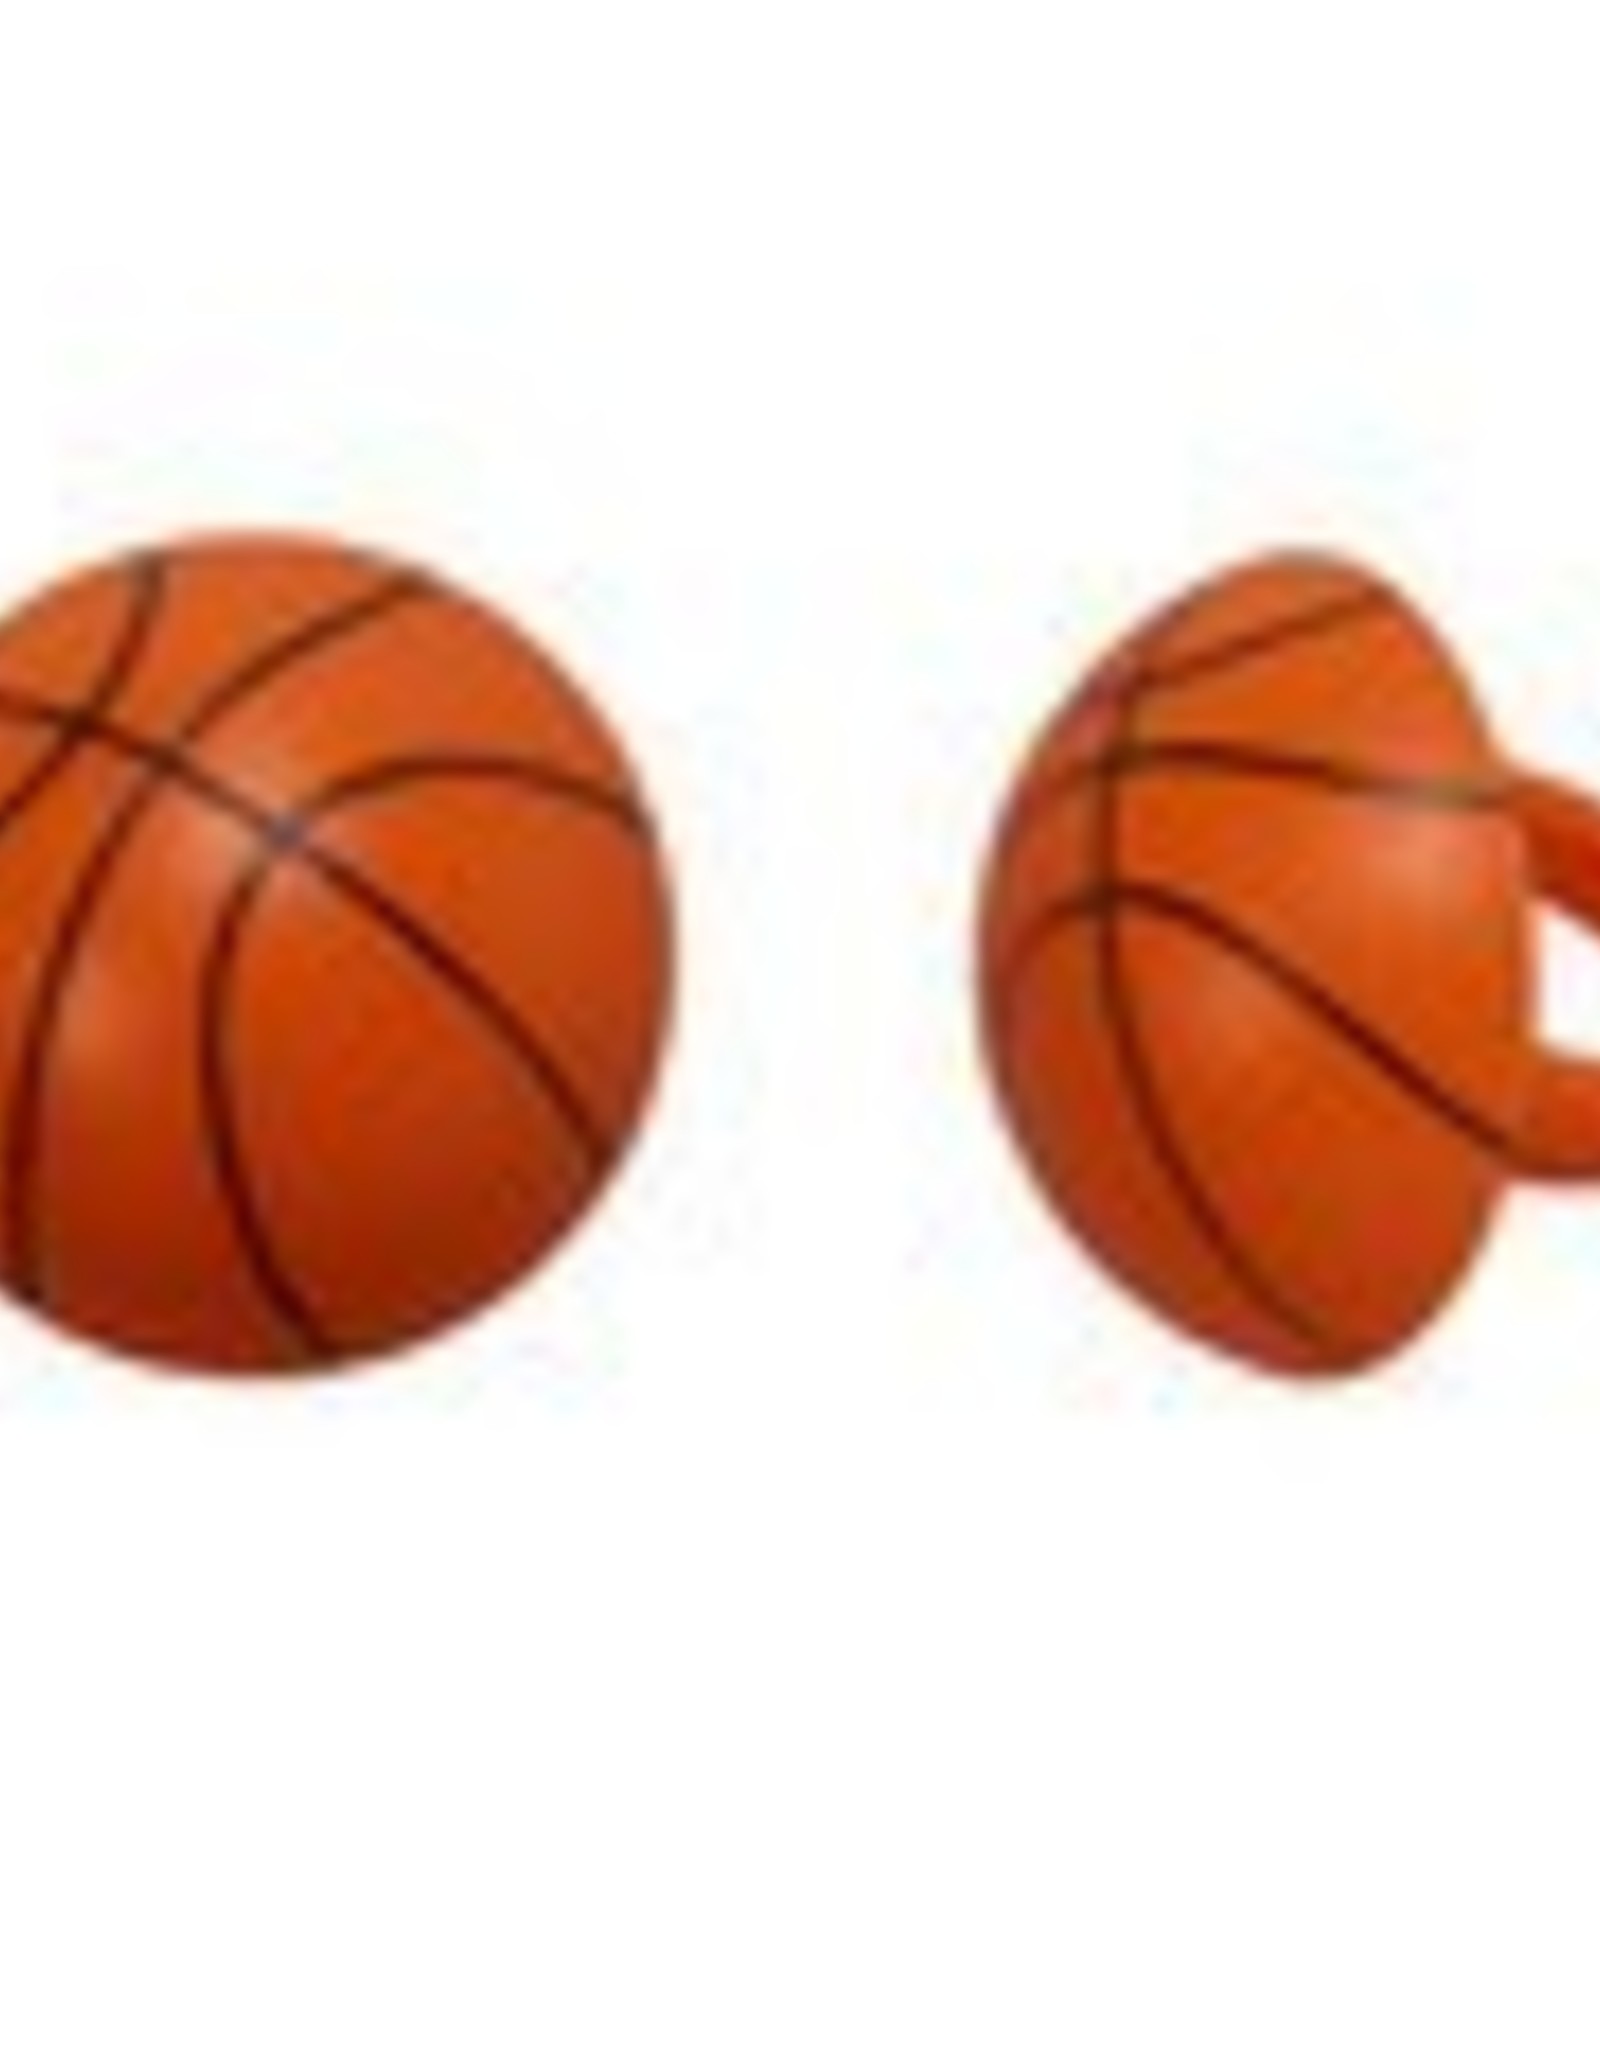 Decopac 3D Basketball Rings